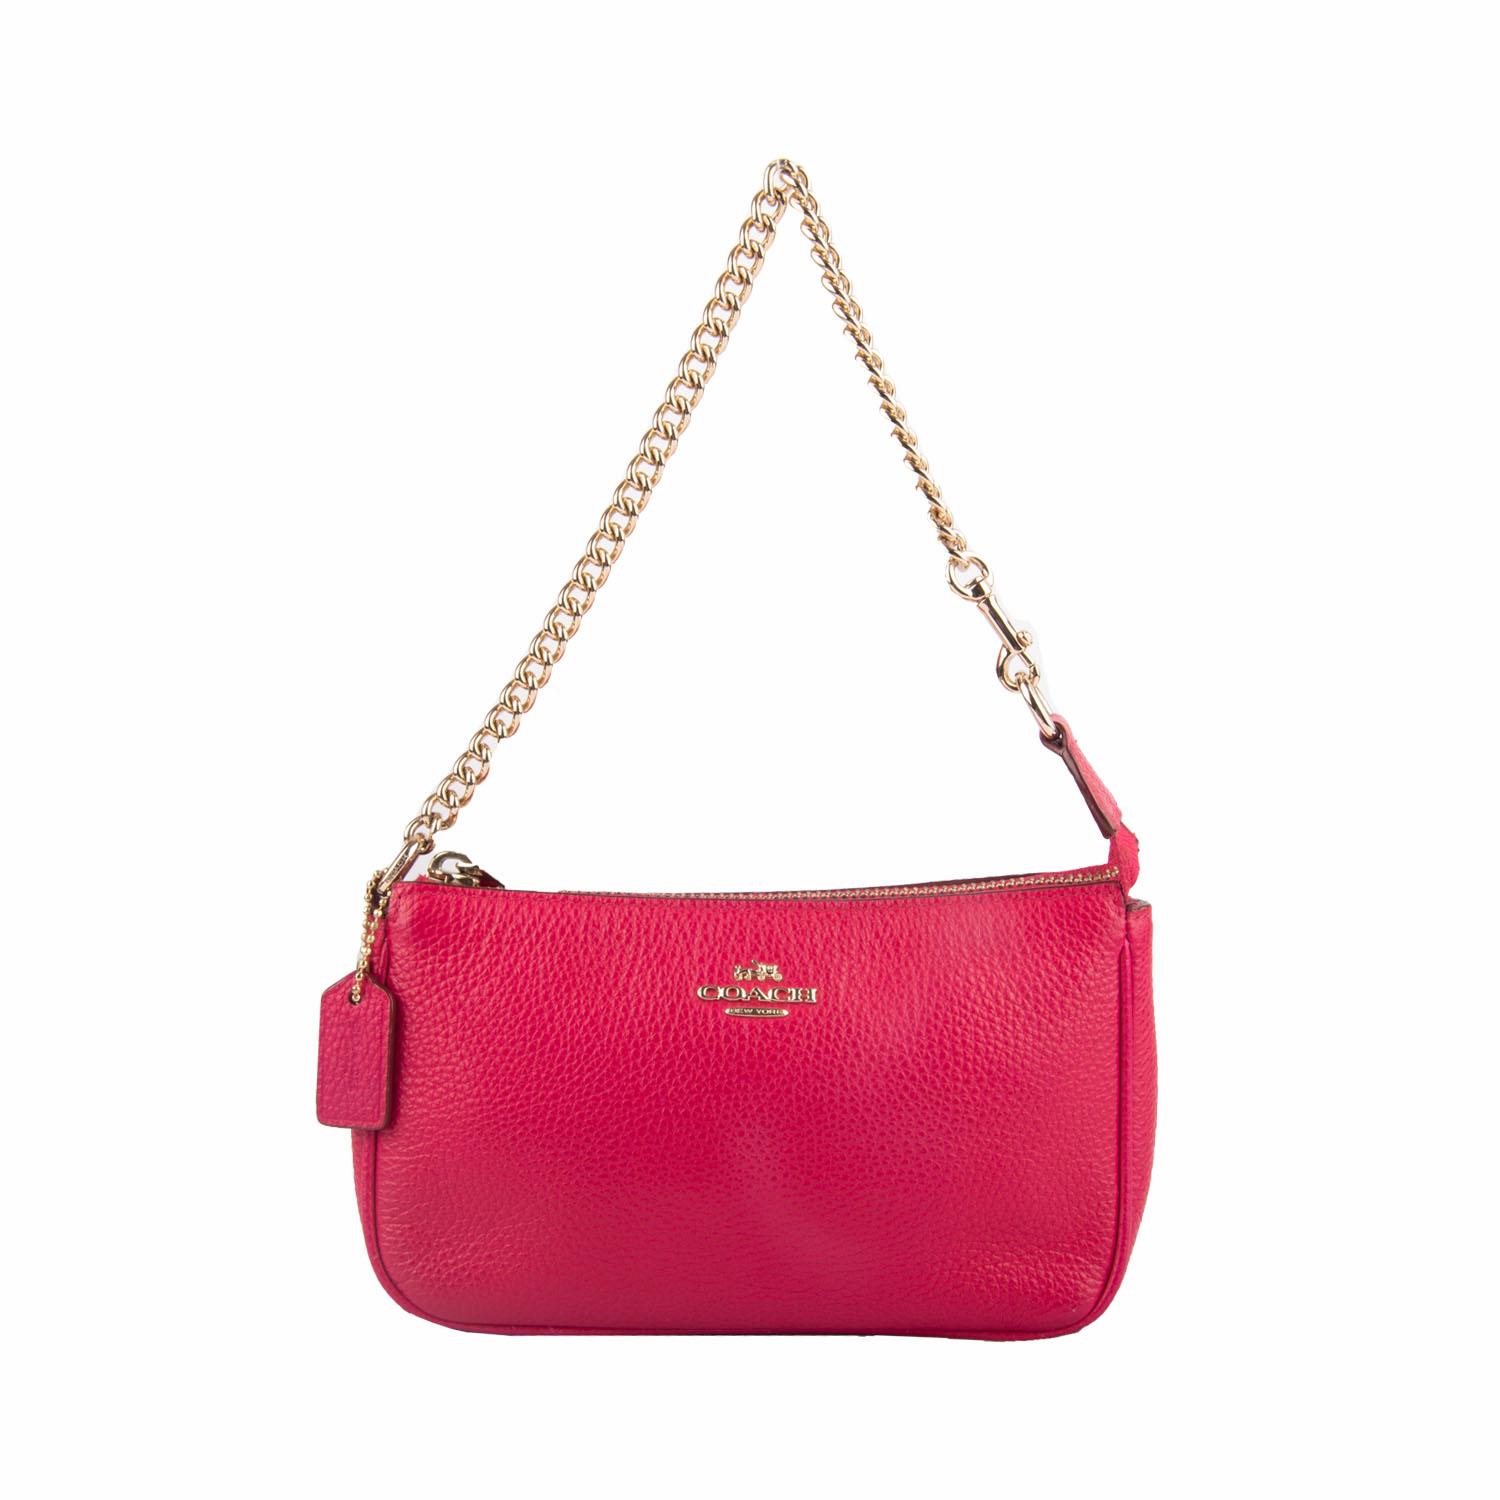 Pebble Leather Pink Wristlet Bag